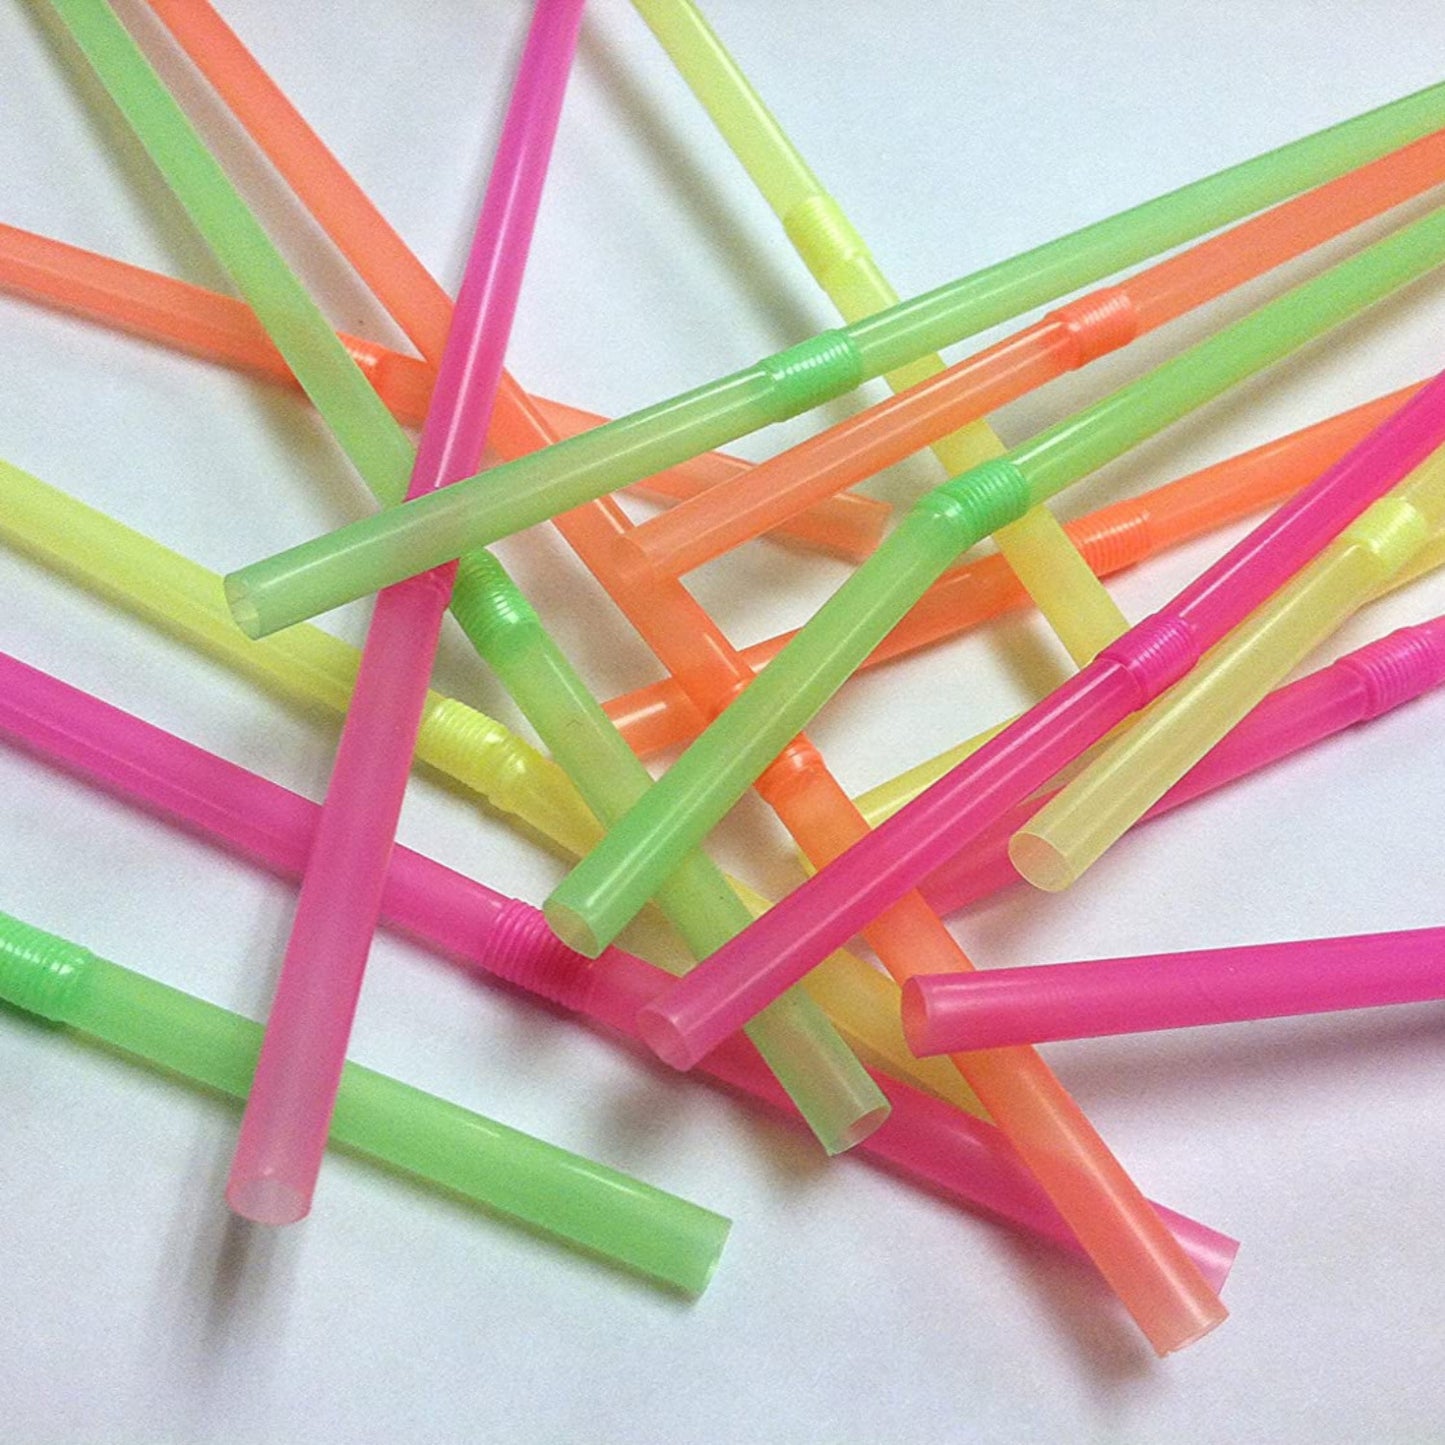 50 Mini Craft Straws (NEON SLIM) - 5.25 inch